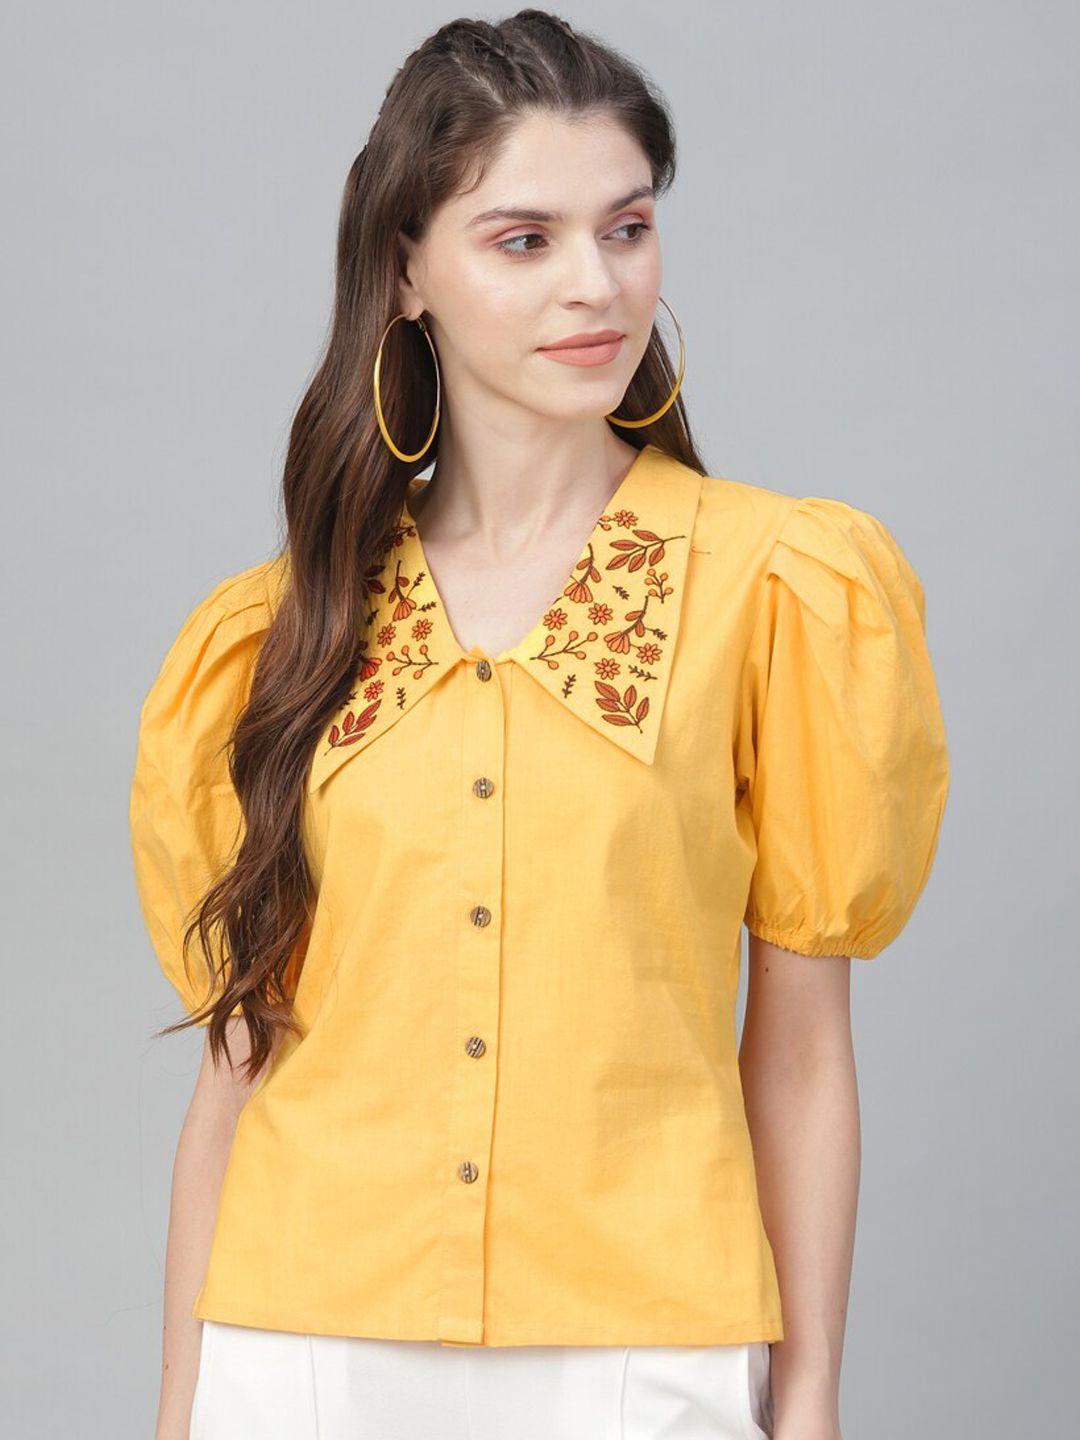 athena women yellow puff sleeves shirt style top